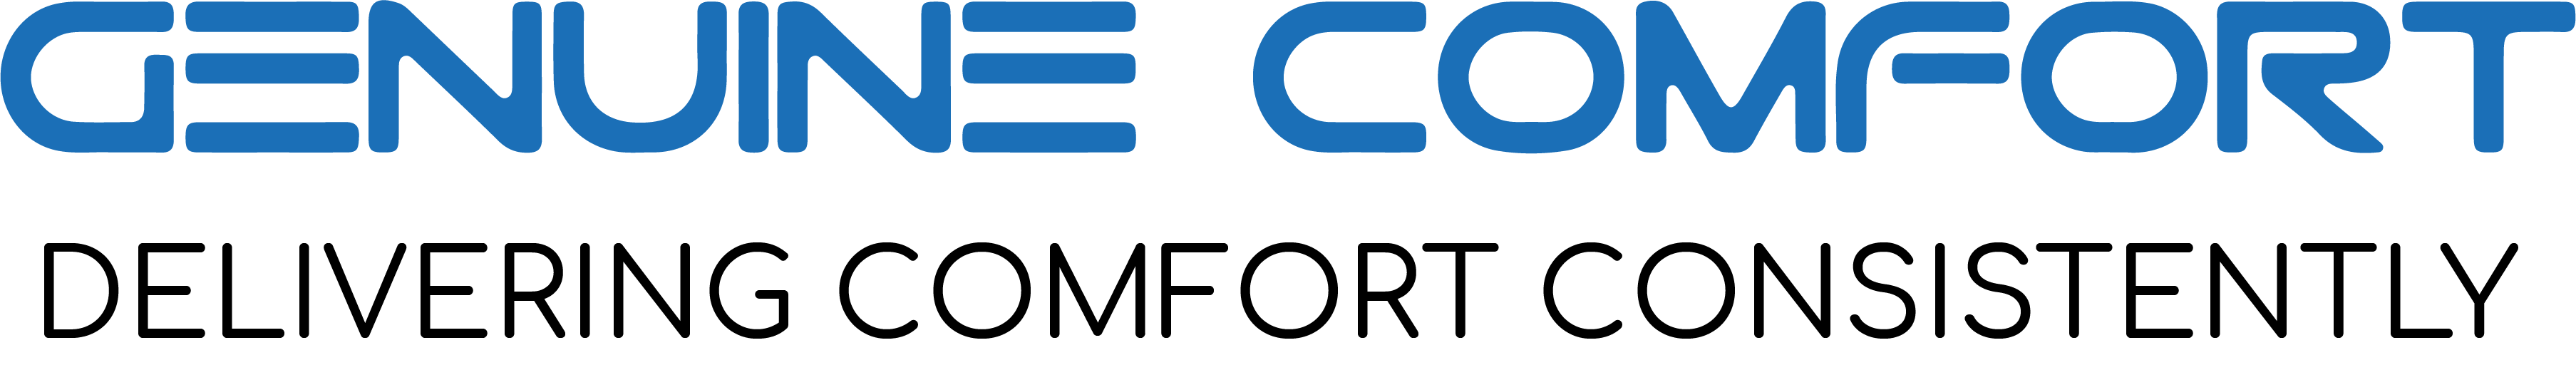 gc-logo-w-comfort-tagline-best